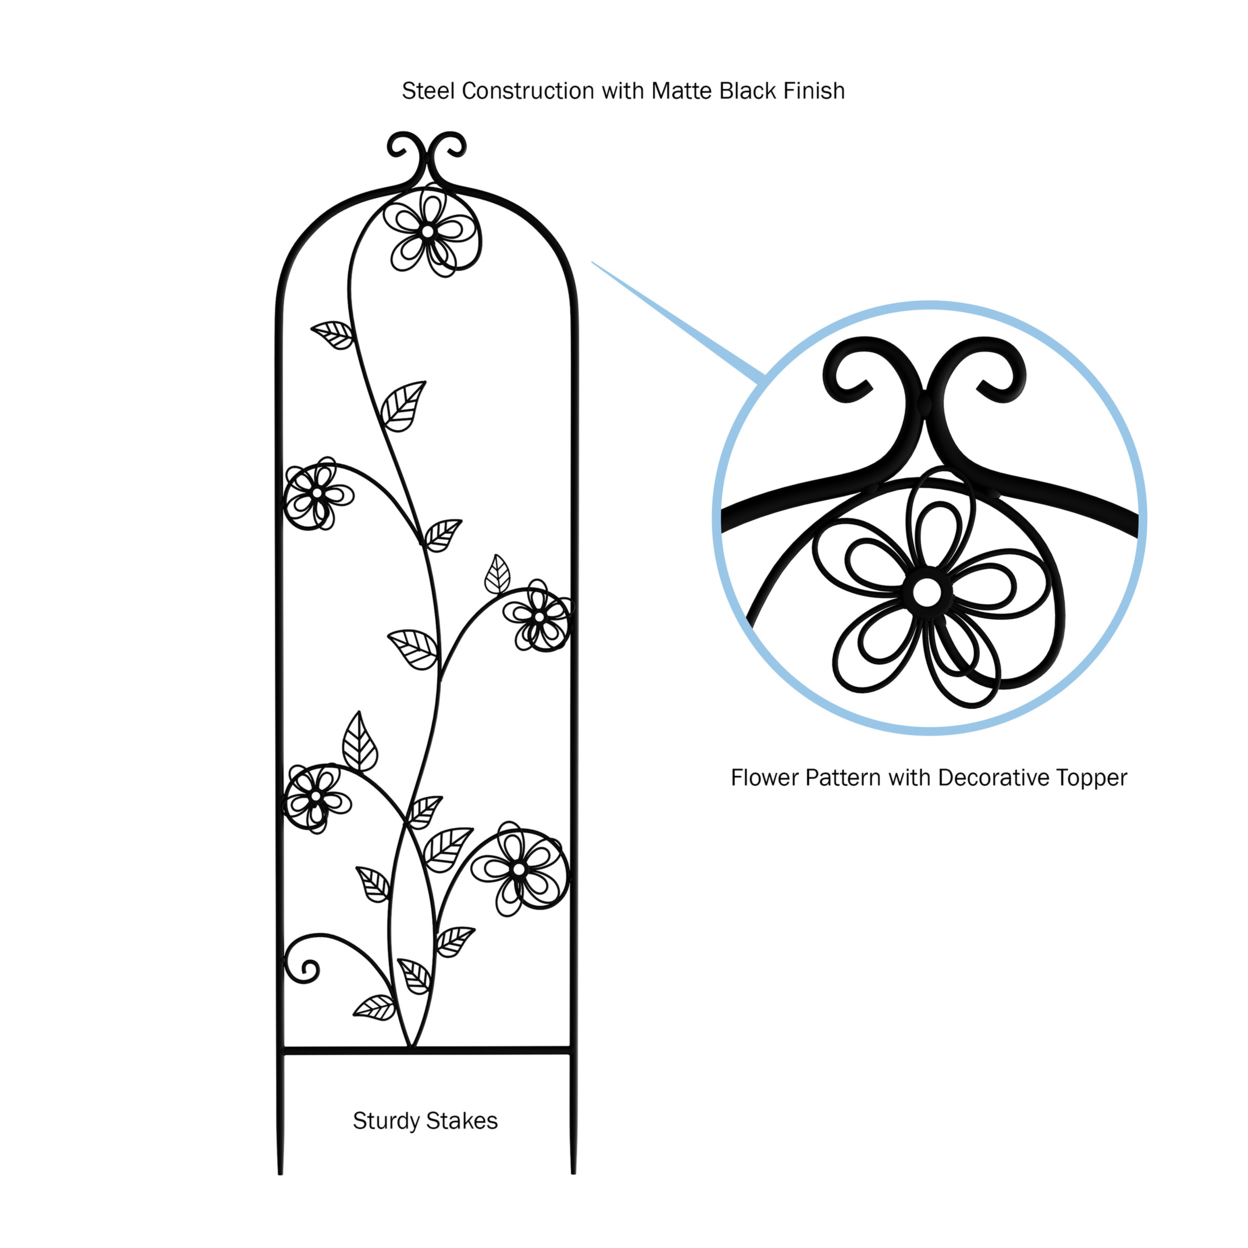 Garden Trellis- For Climbing Plants- Decorative Black Curving Flower Stem Metal Panel -For Vines, Roses, Vegetable Plants & Flowers